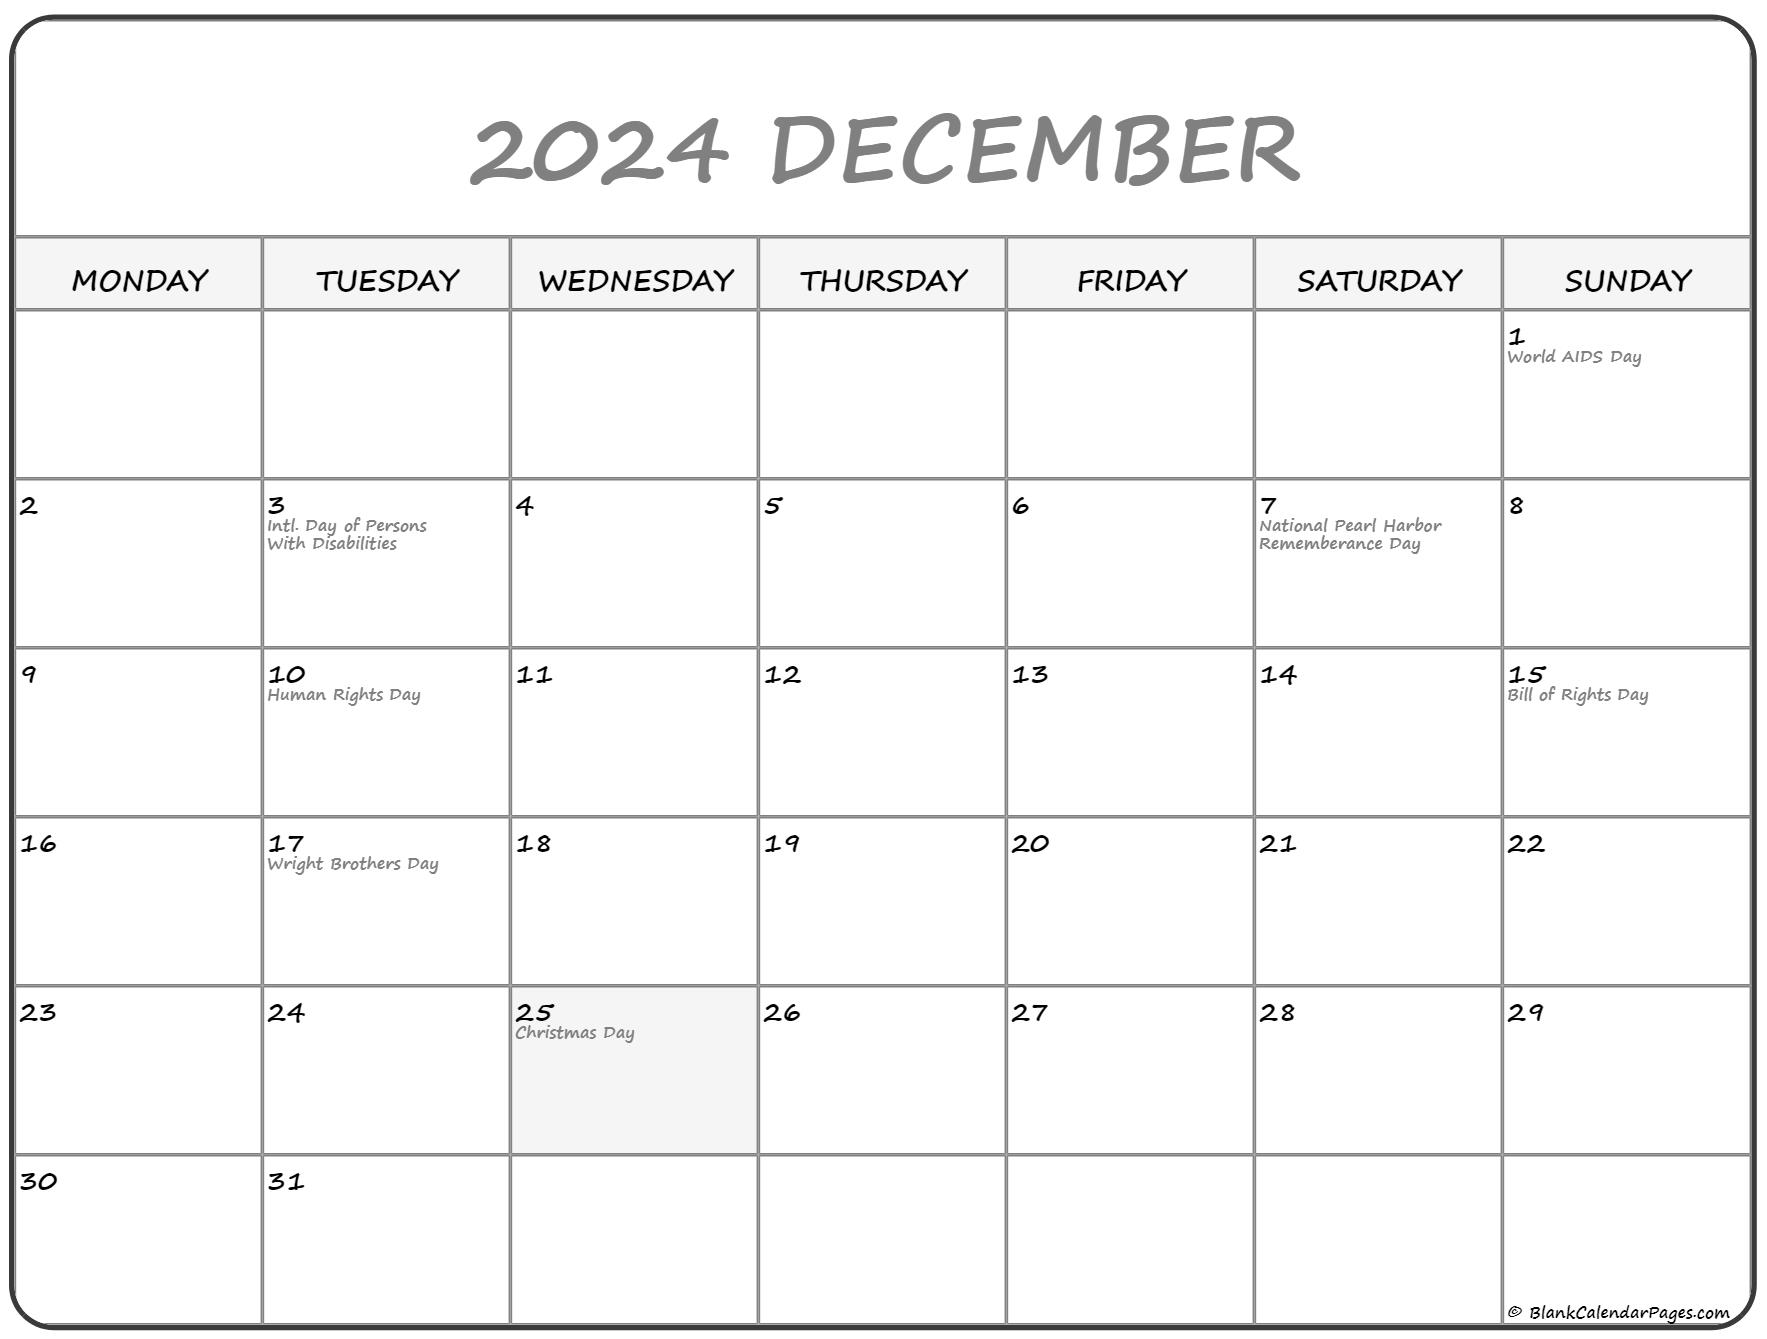 December 2021 Monday Calendar | Monday to Sunday